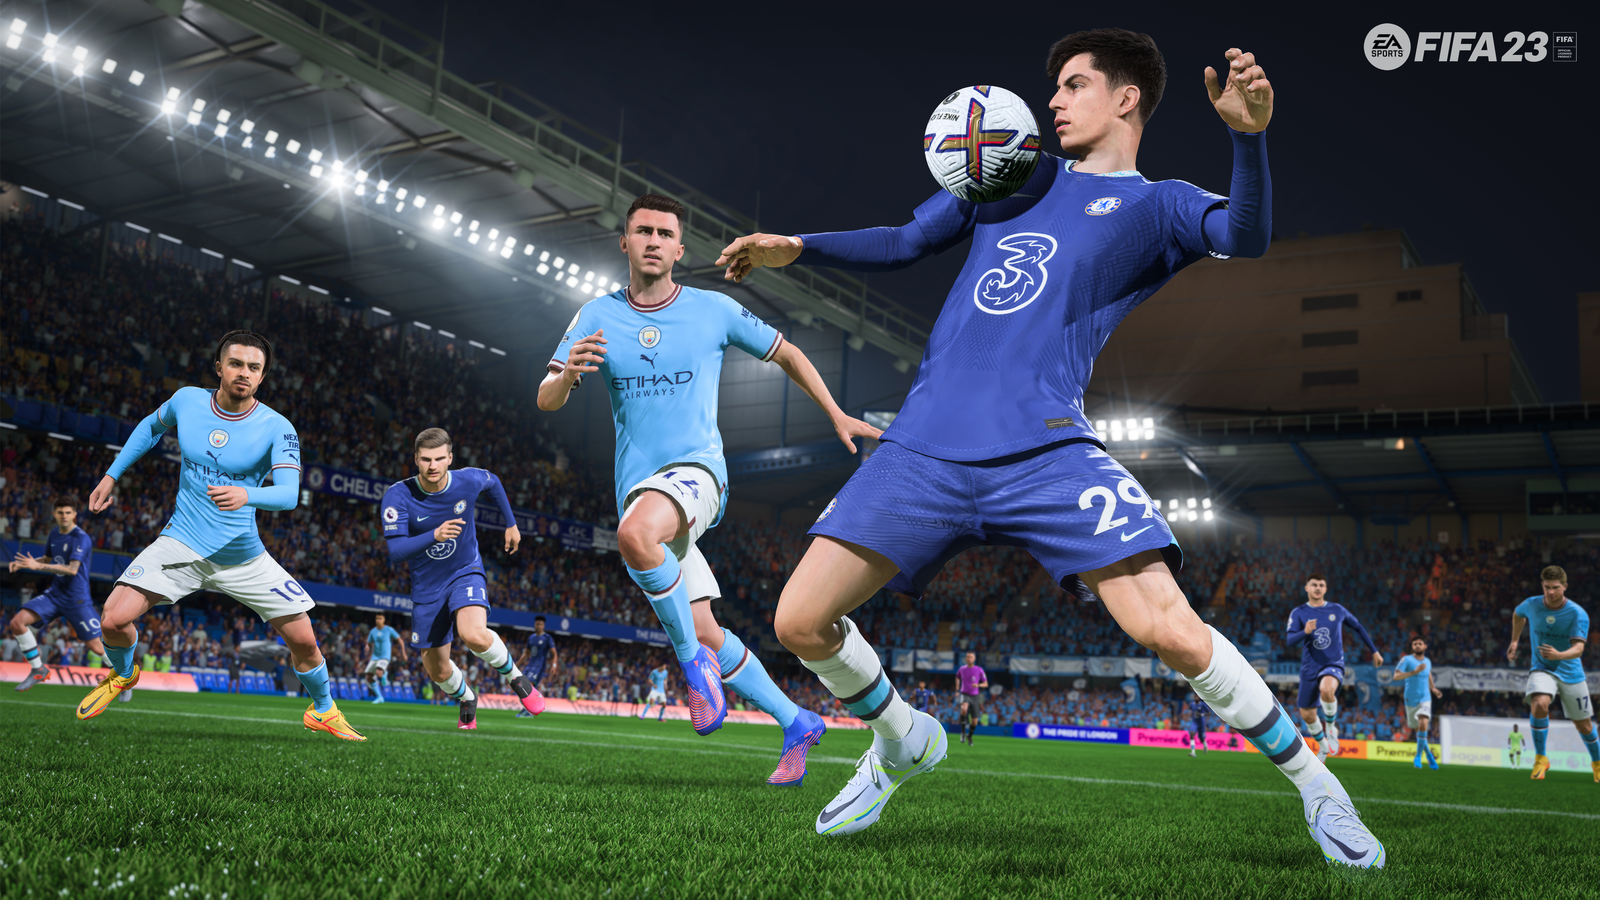 FIFA 21 - Xbox One & Xbox Series X - Xbox One : Video Games 